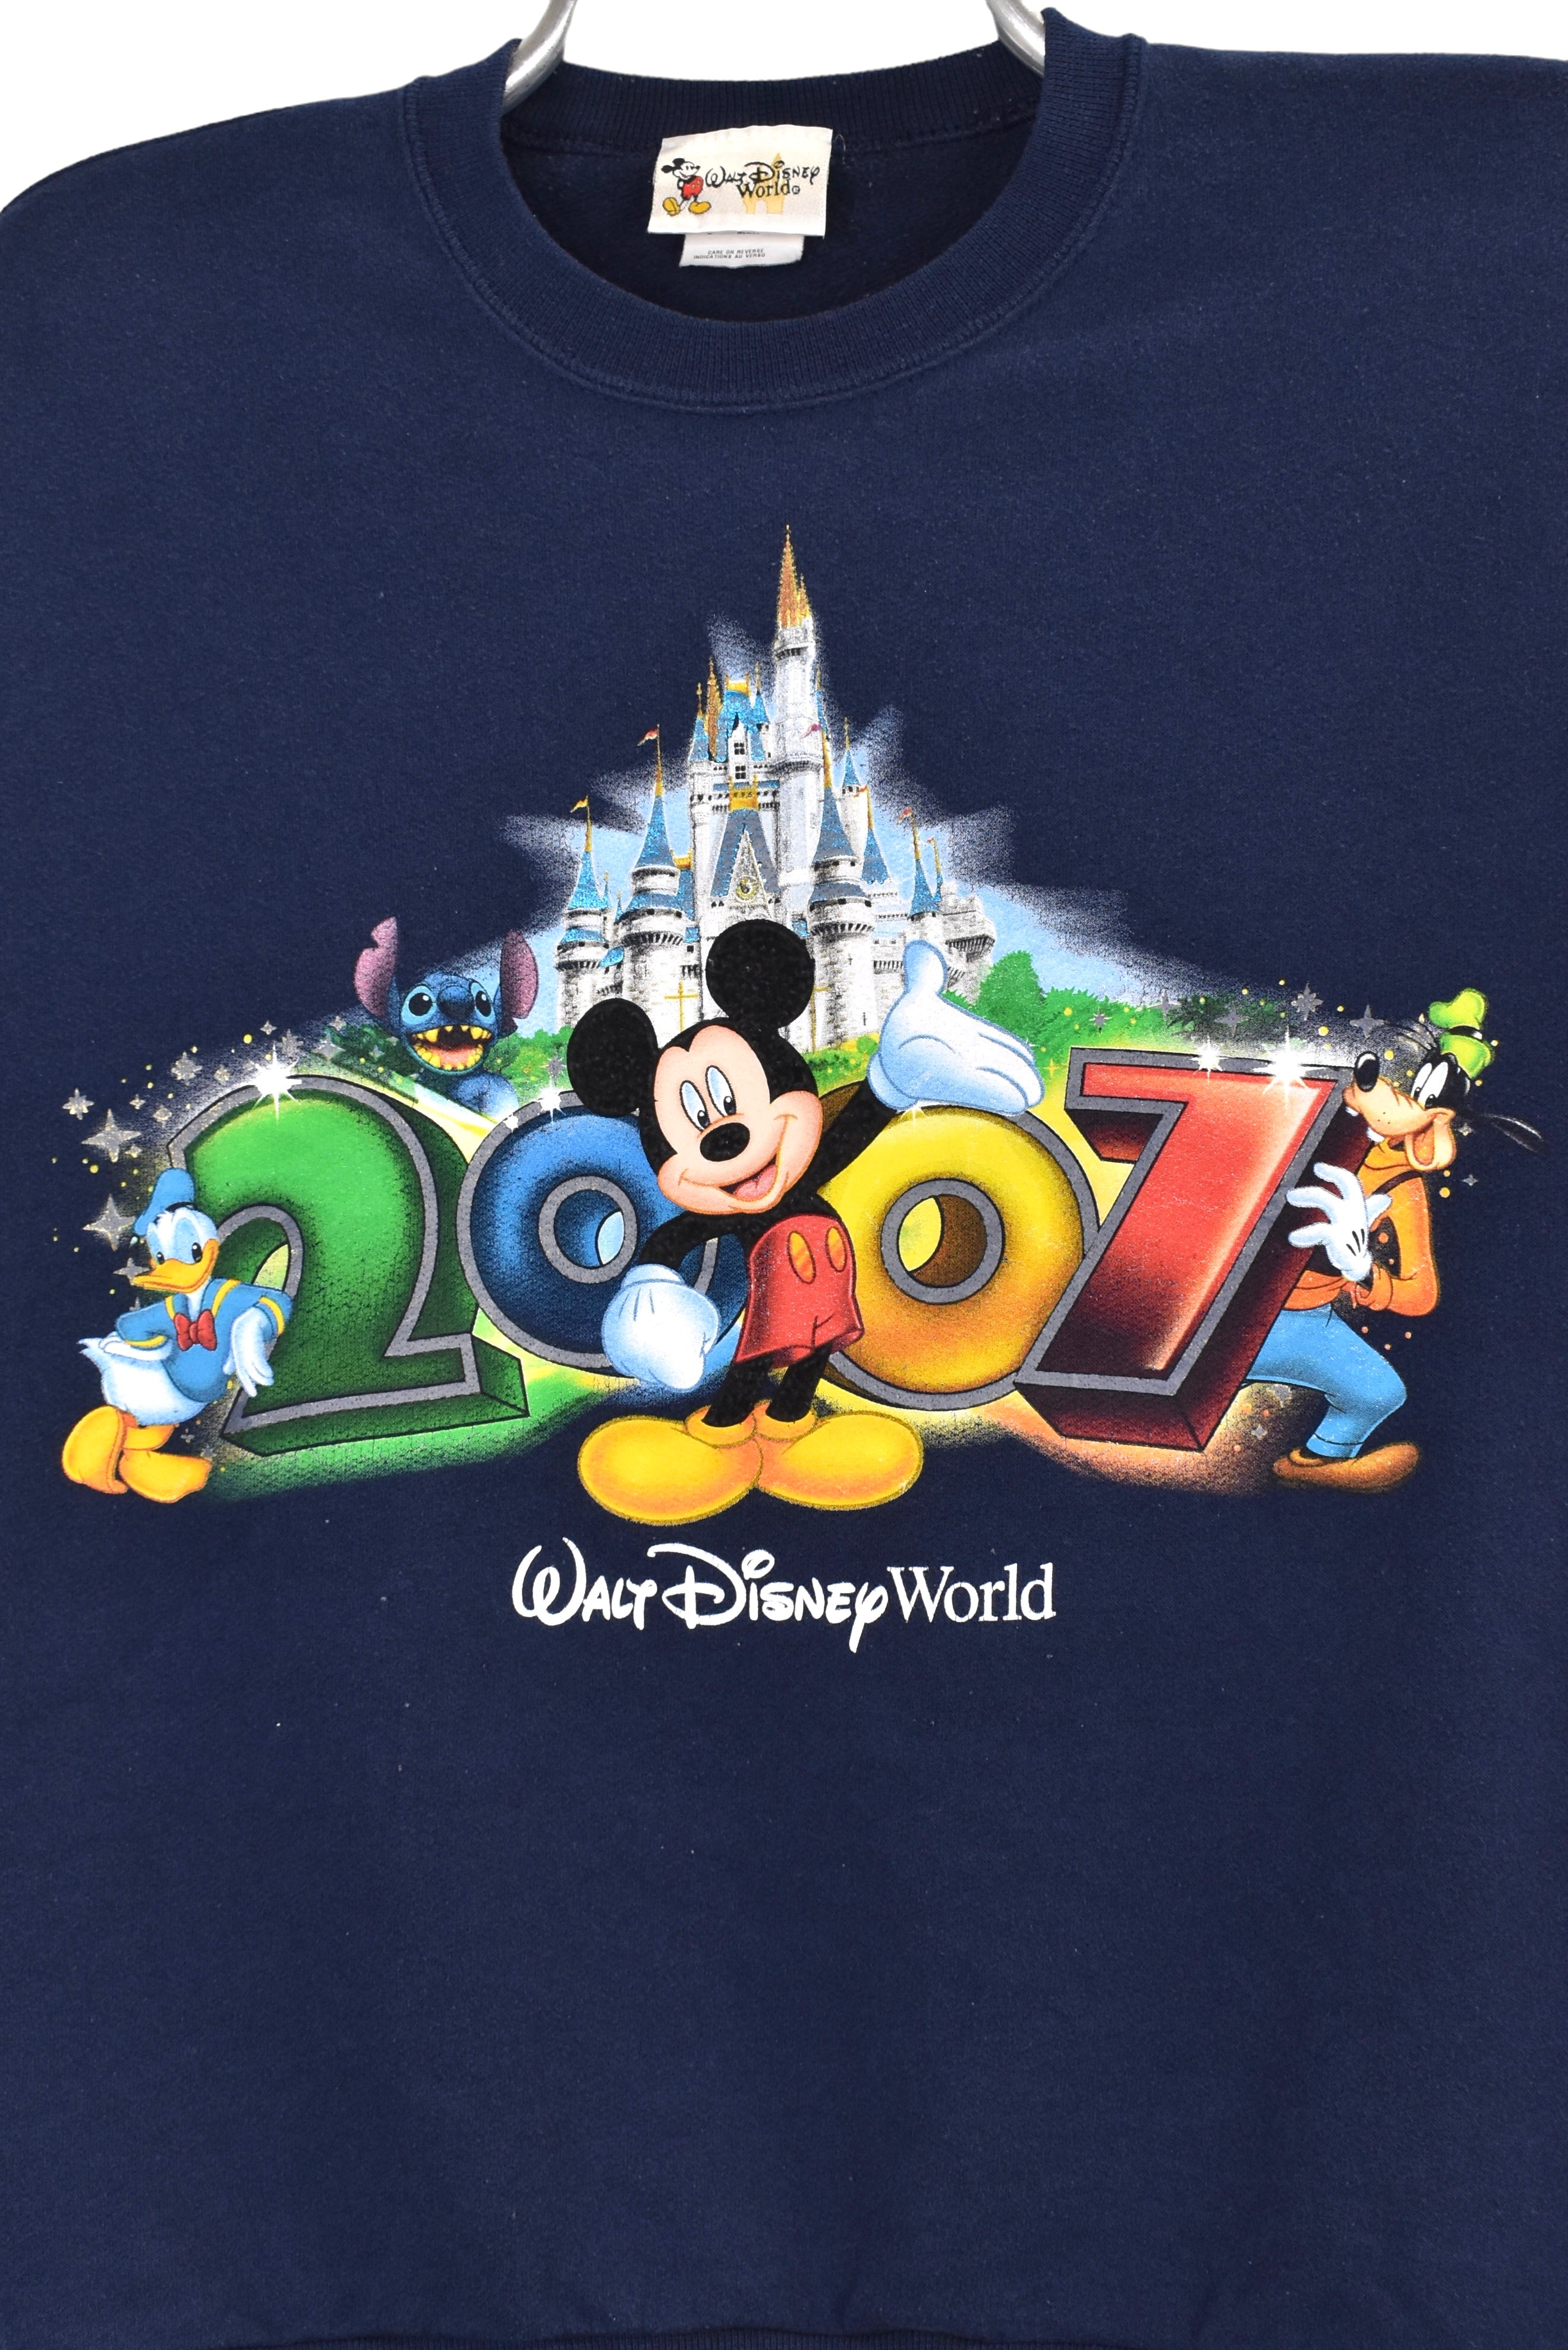 Vintage Disney World sweatshirt (S), navy Mickey Mouse graphic crewneck